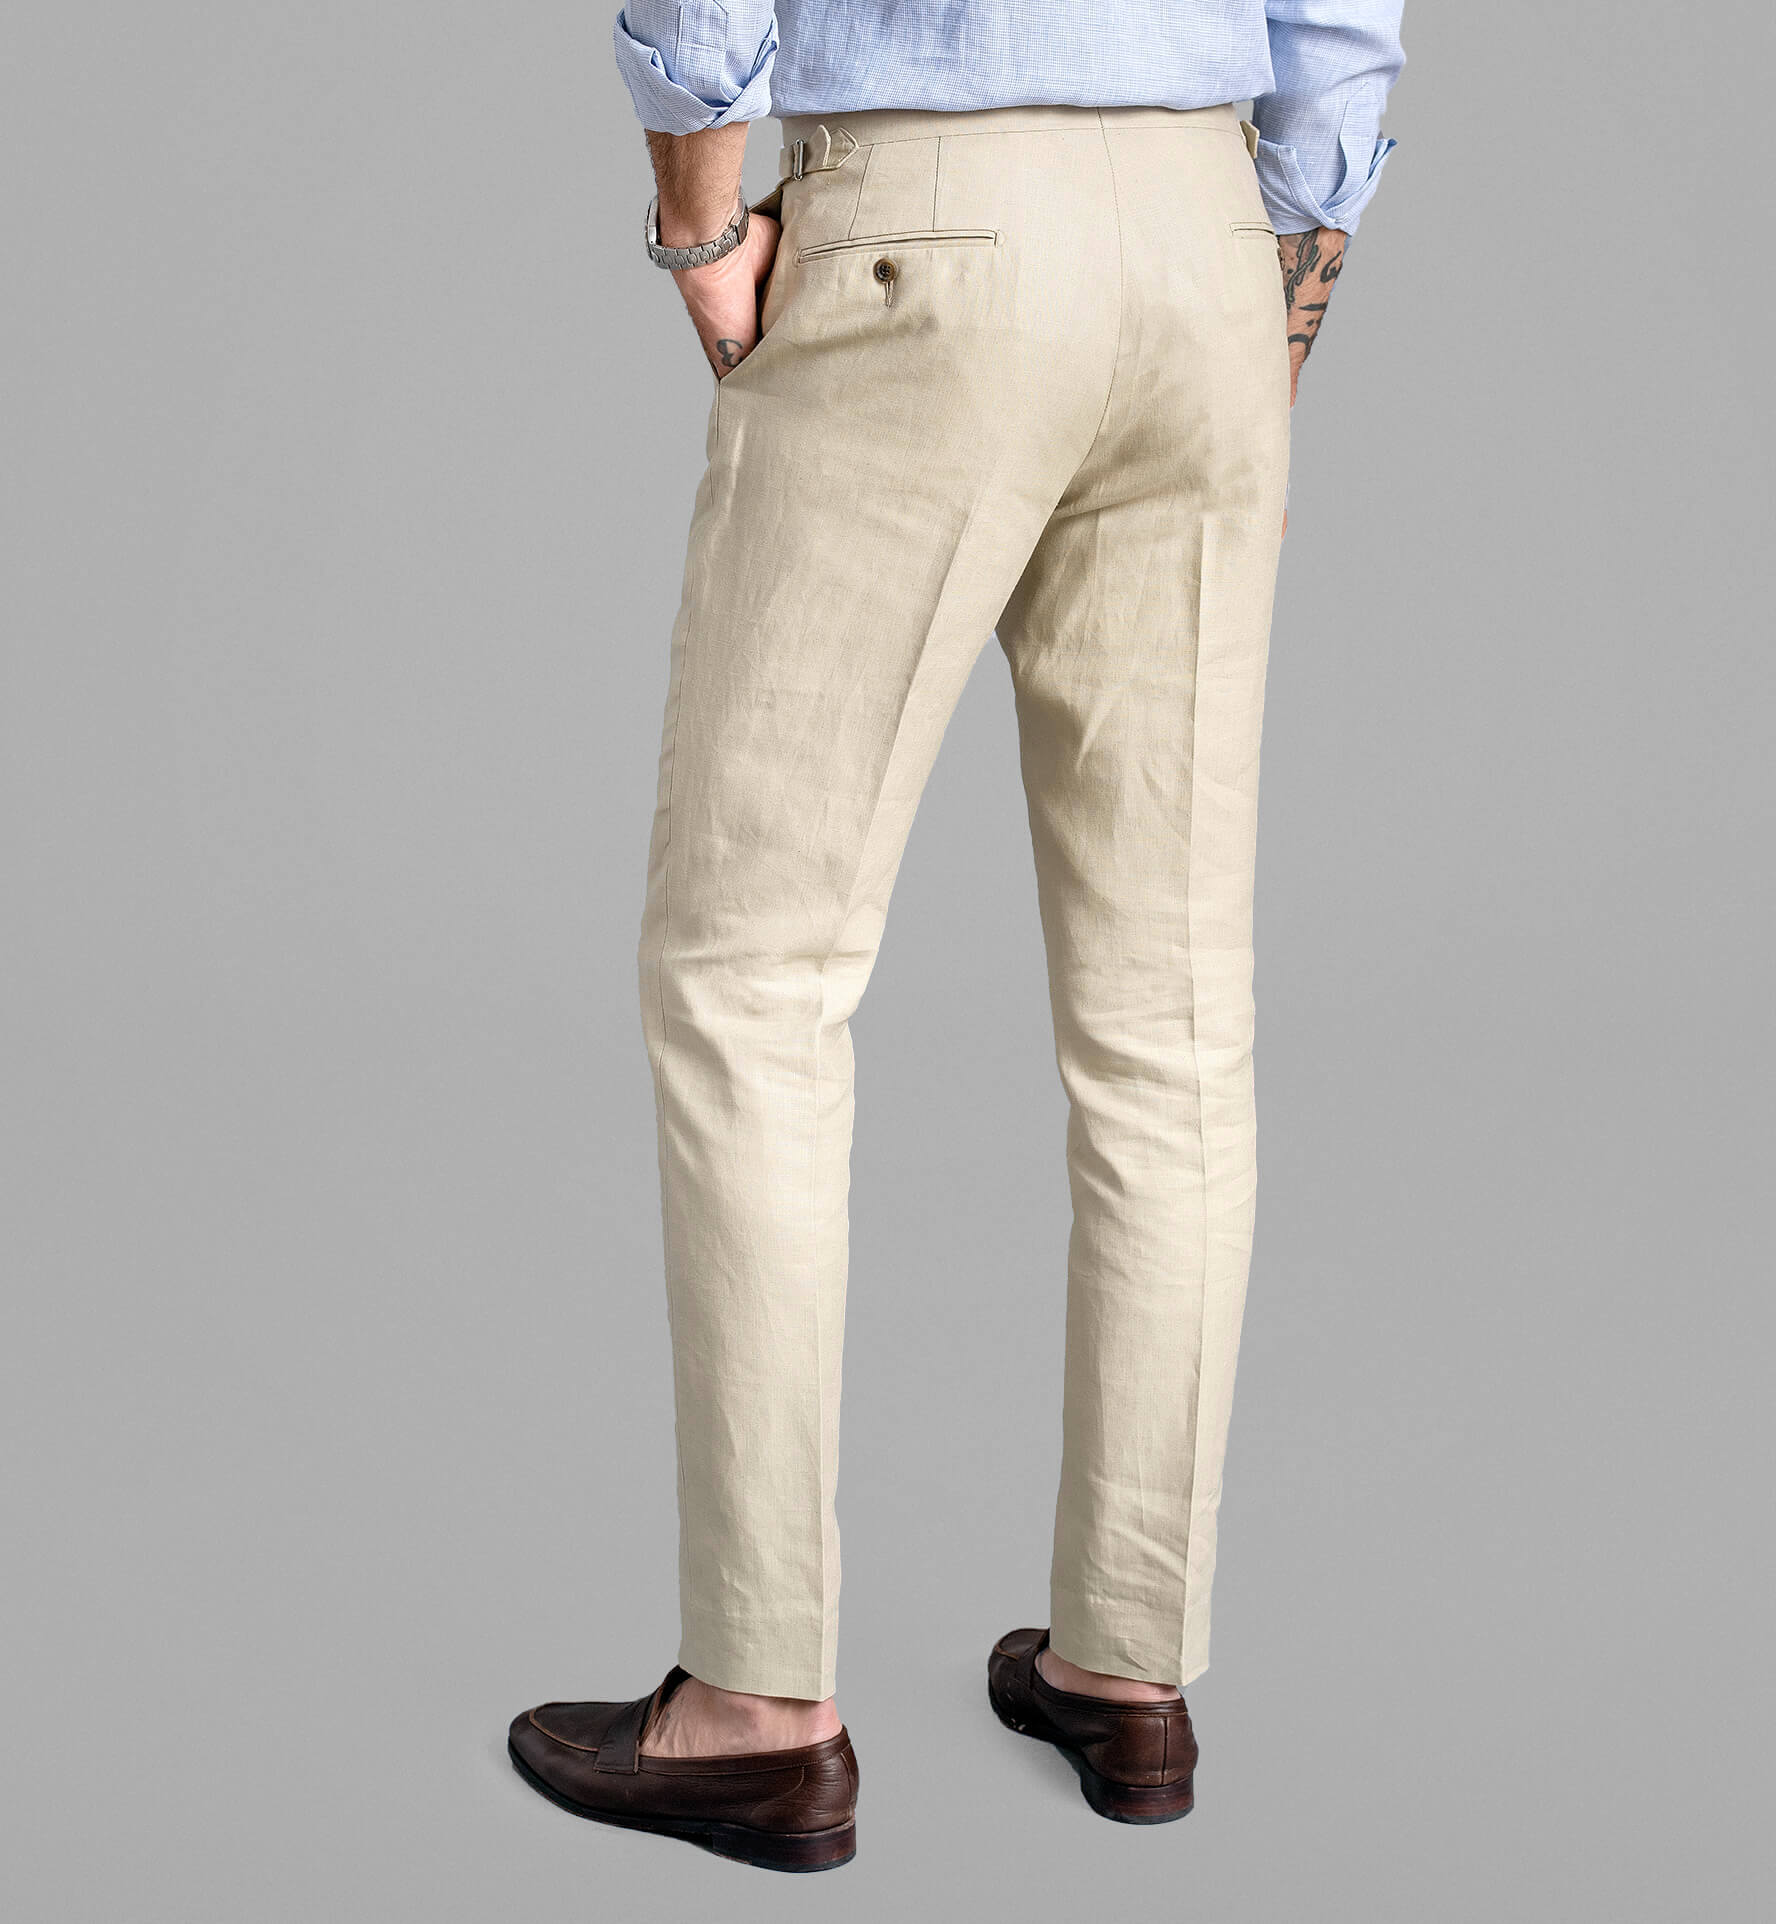 Allen Beige Irish Linen Dress Pant - Custom Fit Tailored Clothing